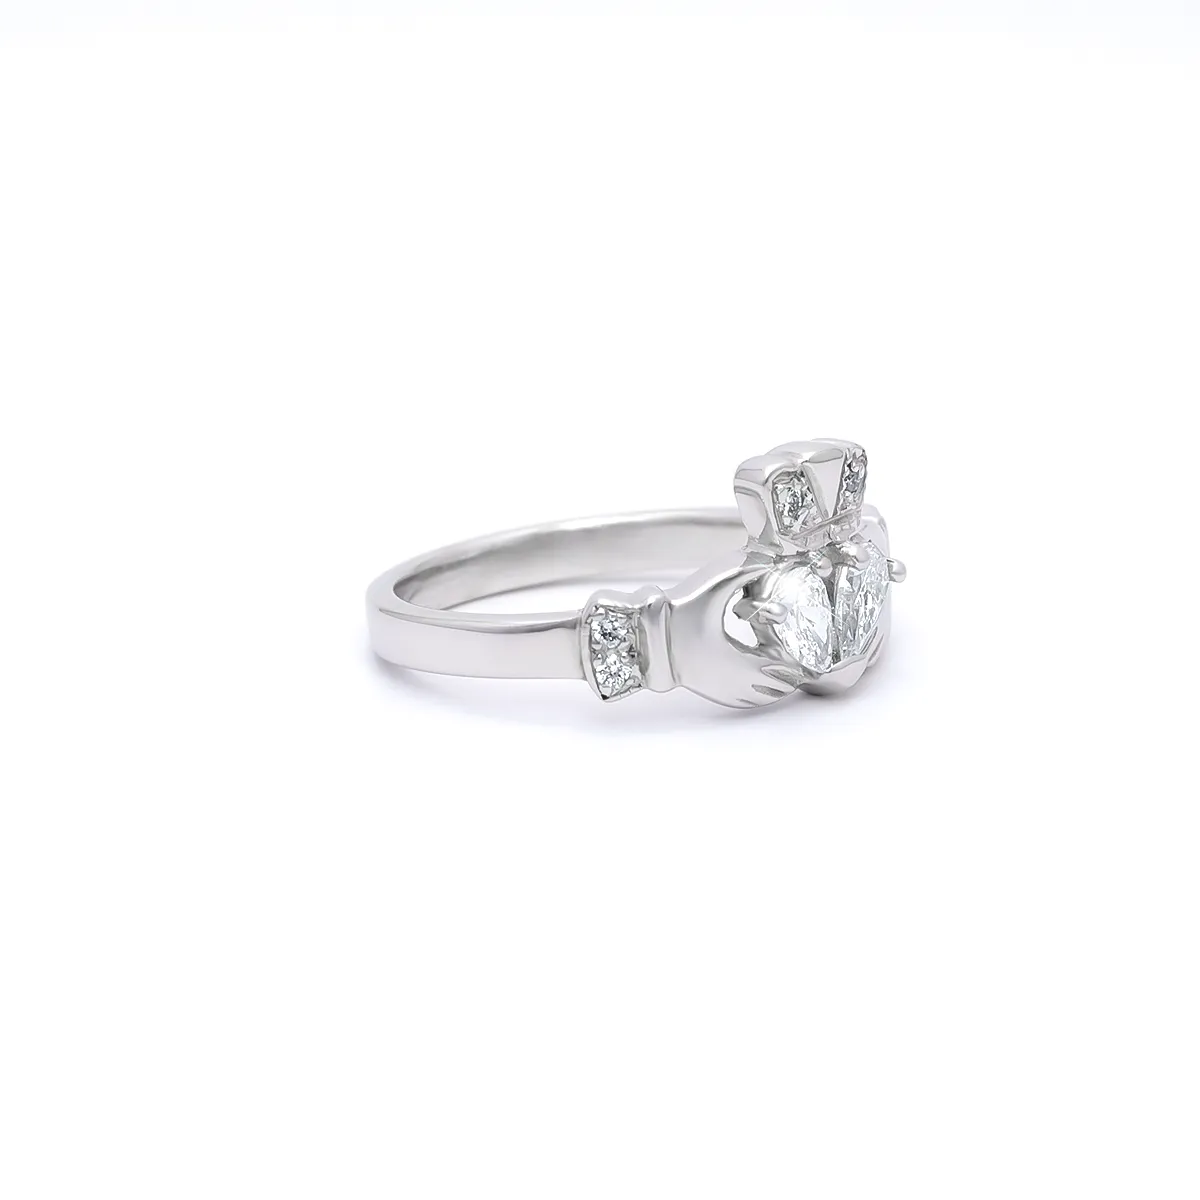 IJC00015 White Gold Diamond Claddagh Ring 03